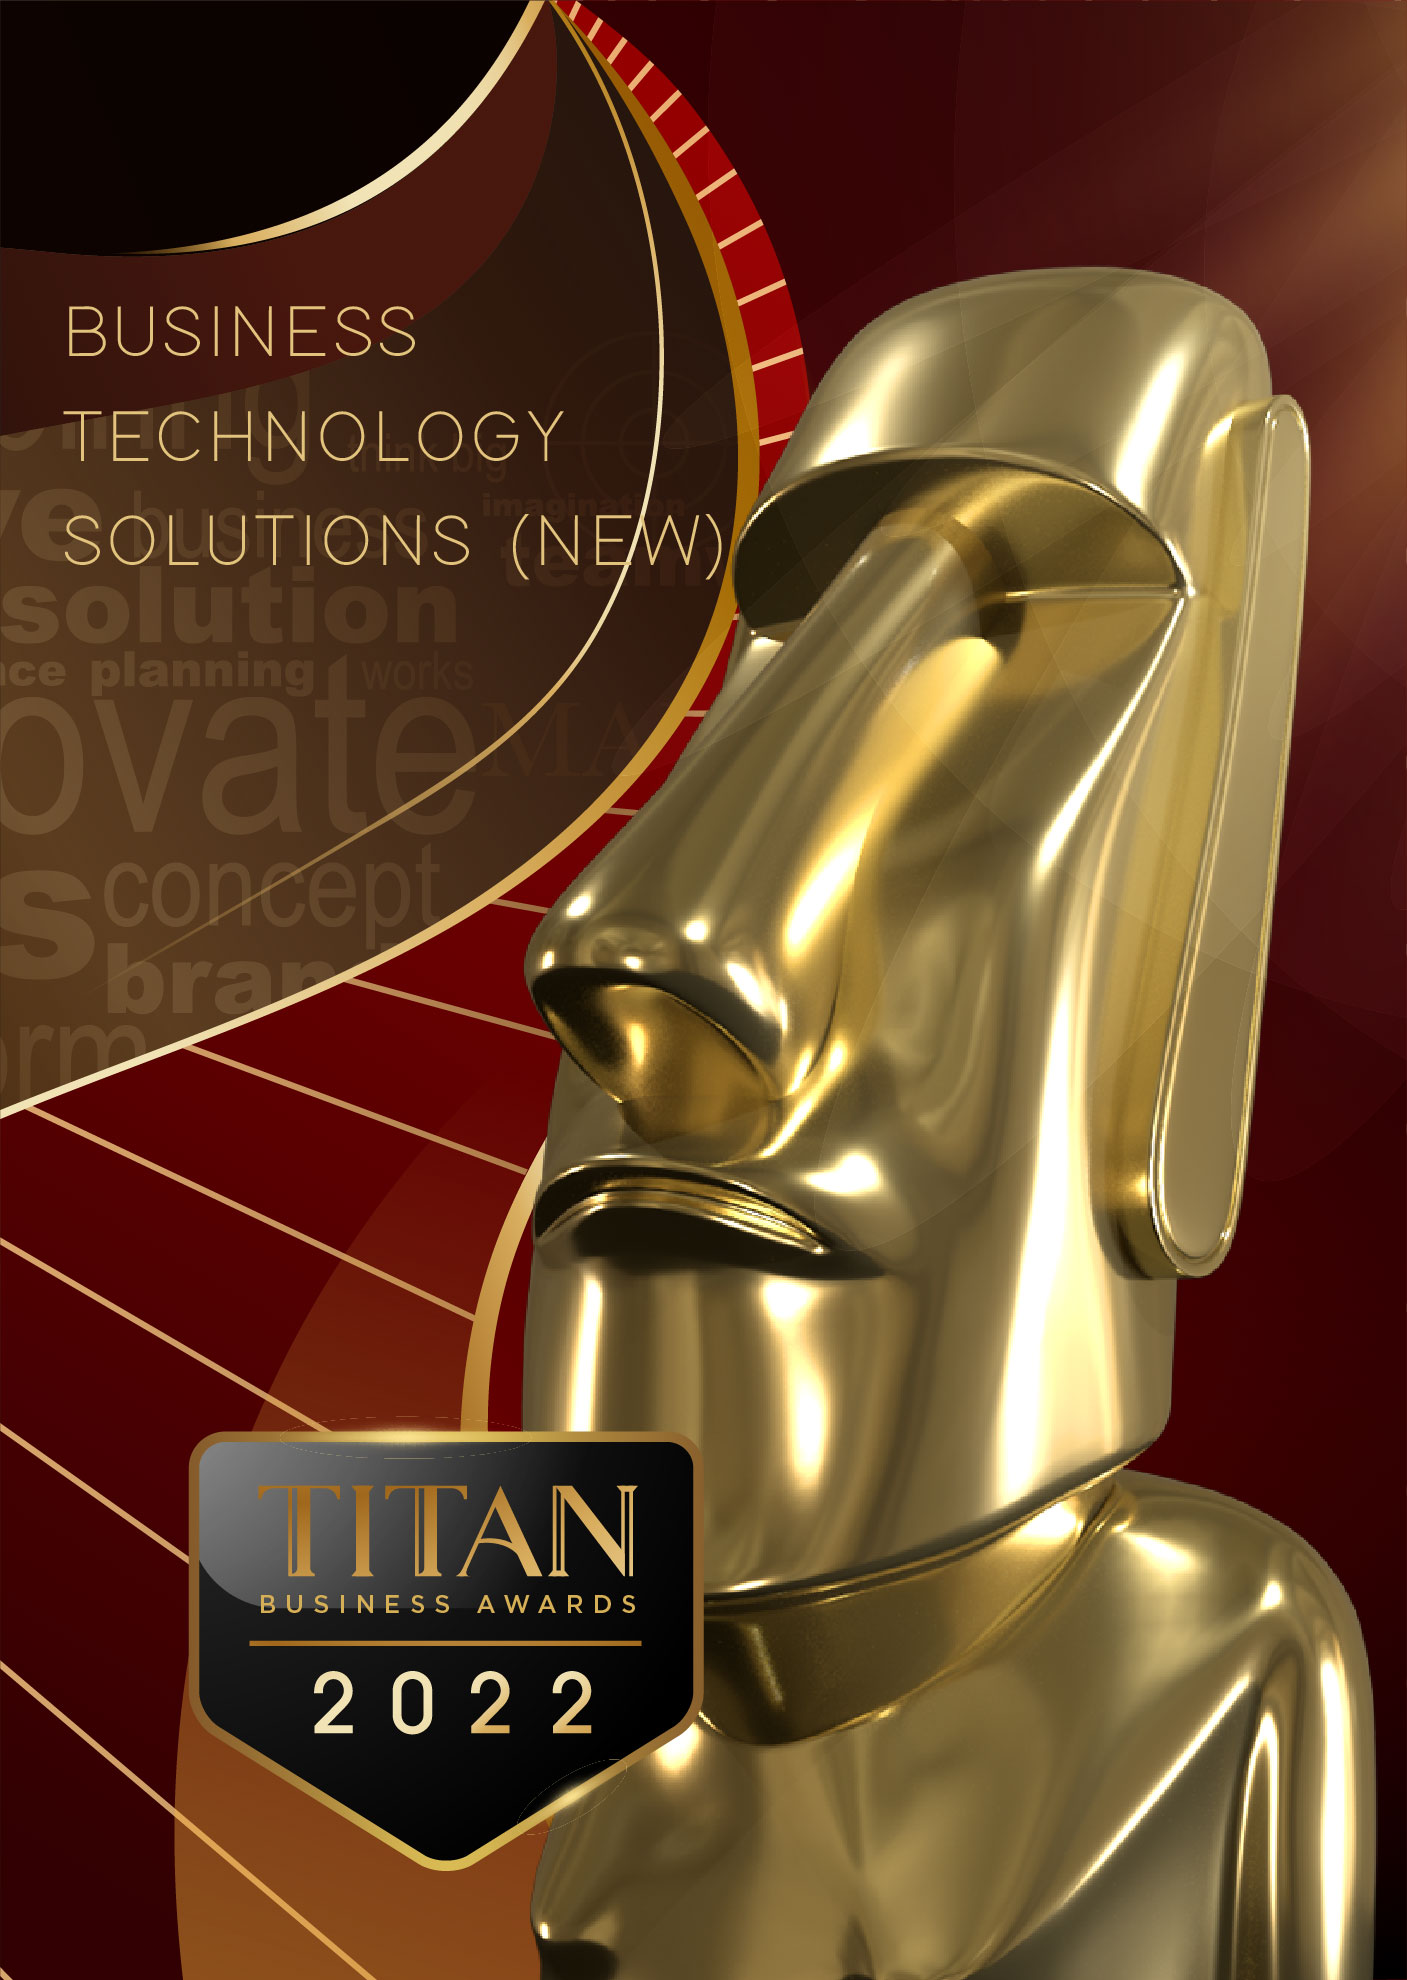 TITAN Business Technology Solution Awards 2022